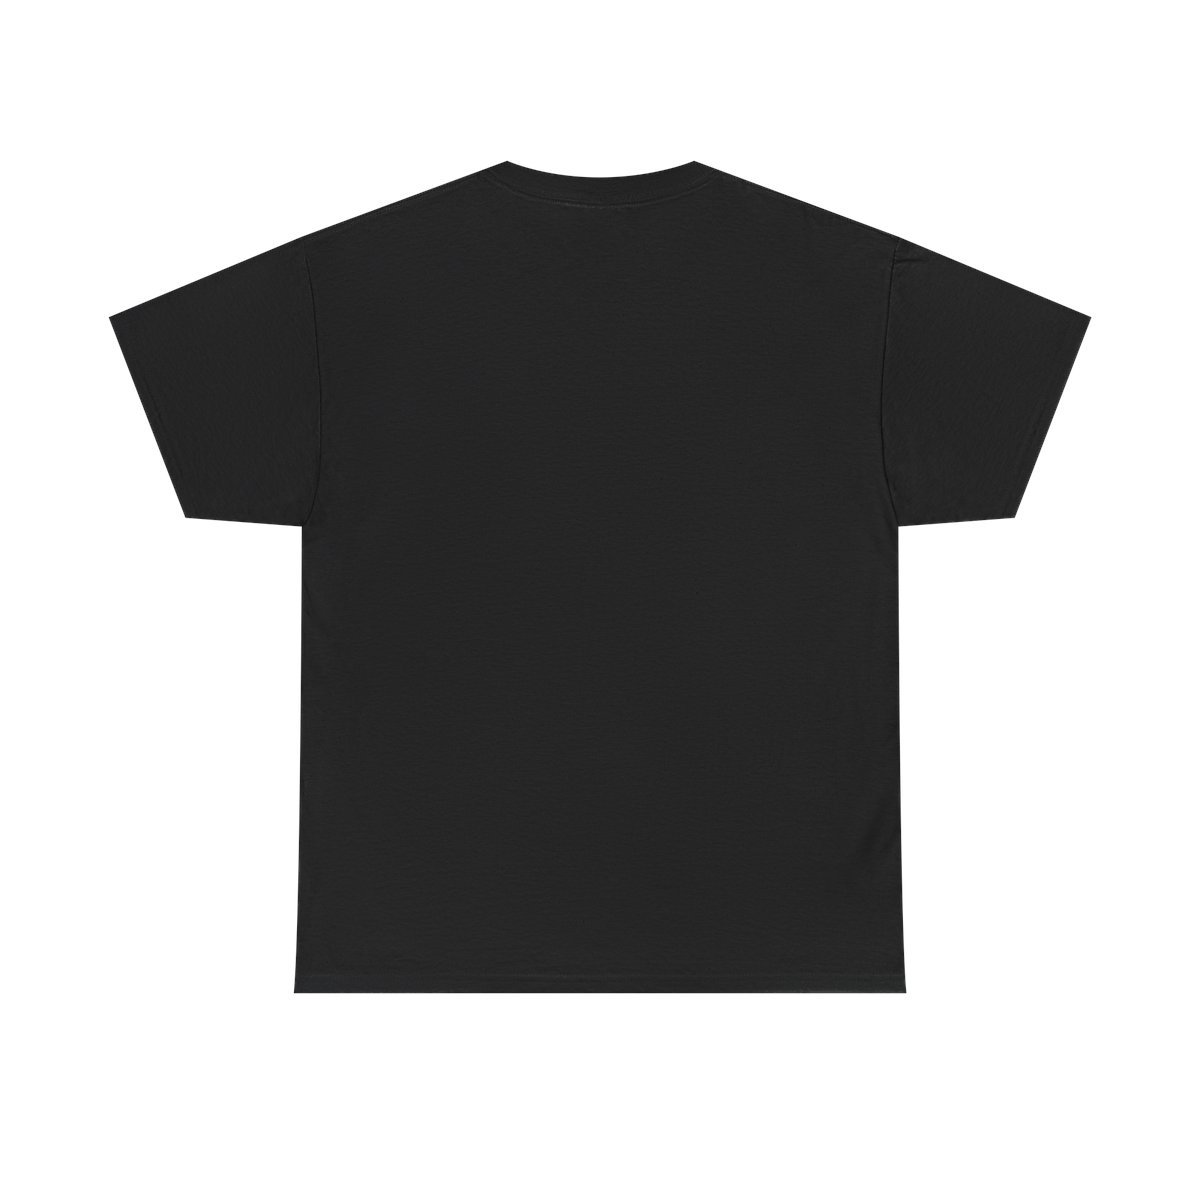 KOT Flame Logo Short Sleeve T-Shirt